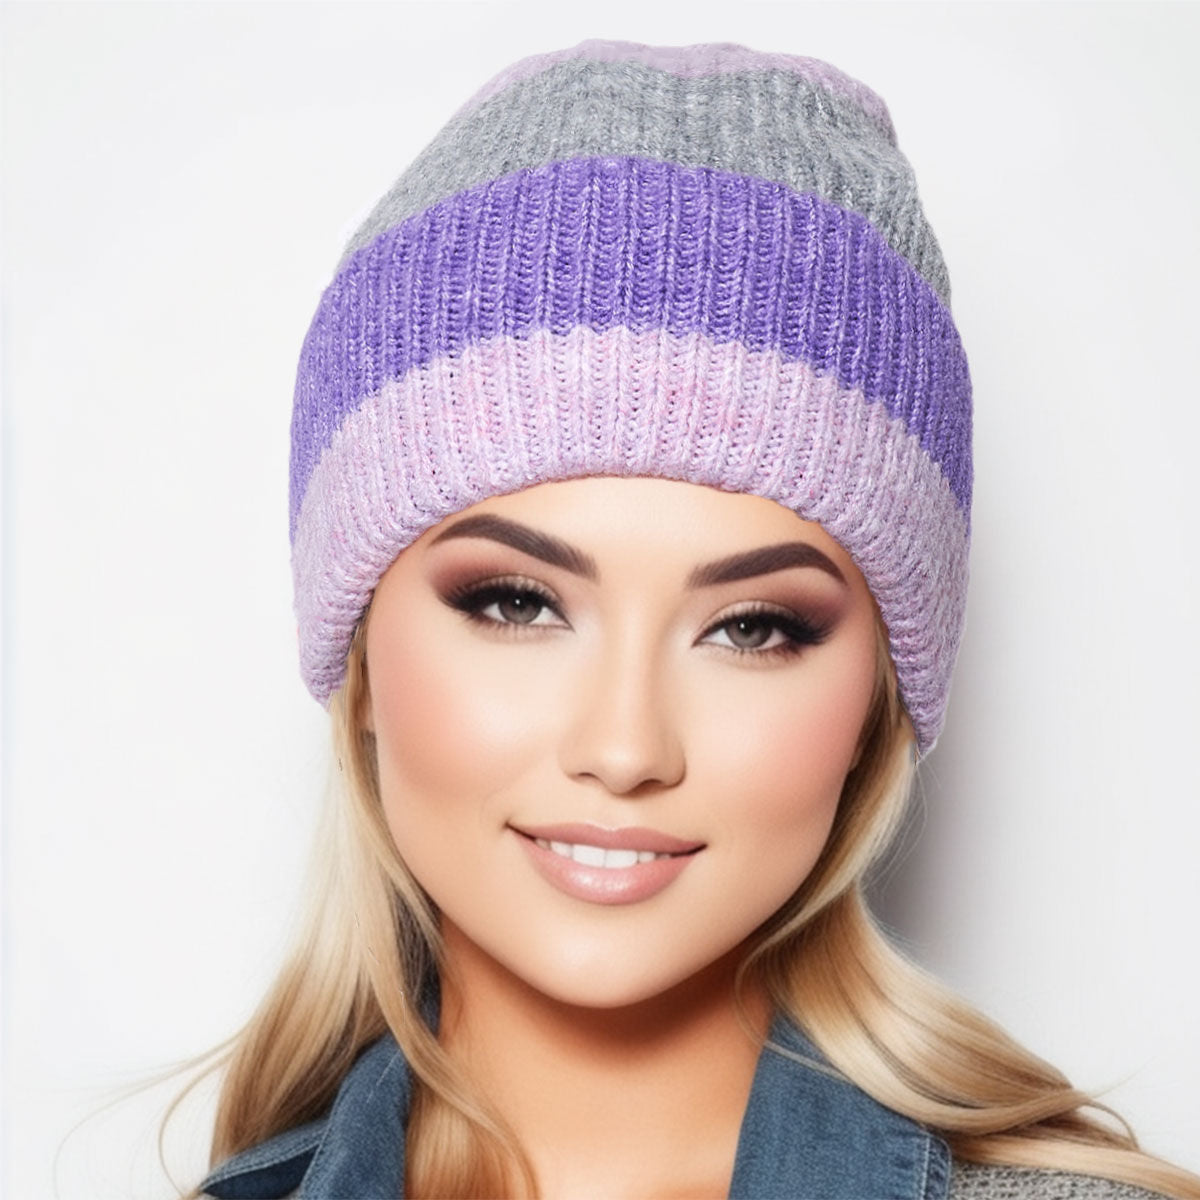 Beanie Purple Pink Striped Hat for Women